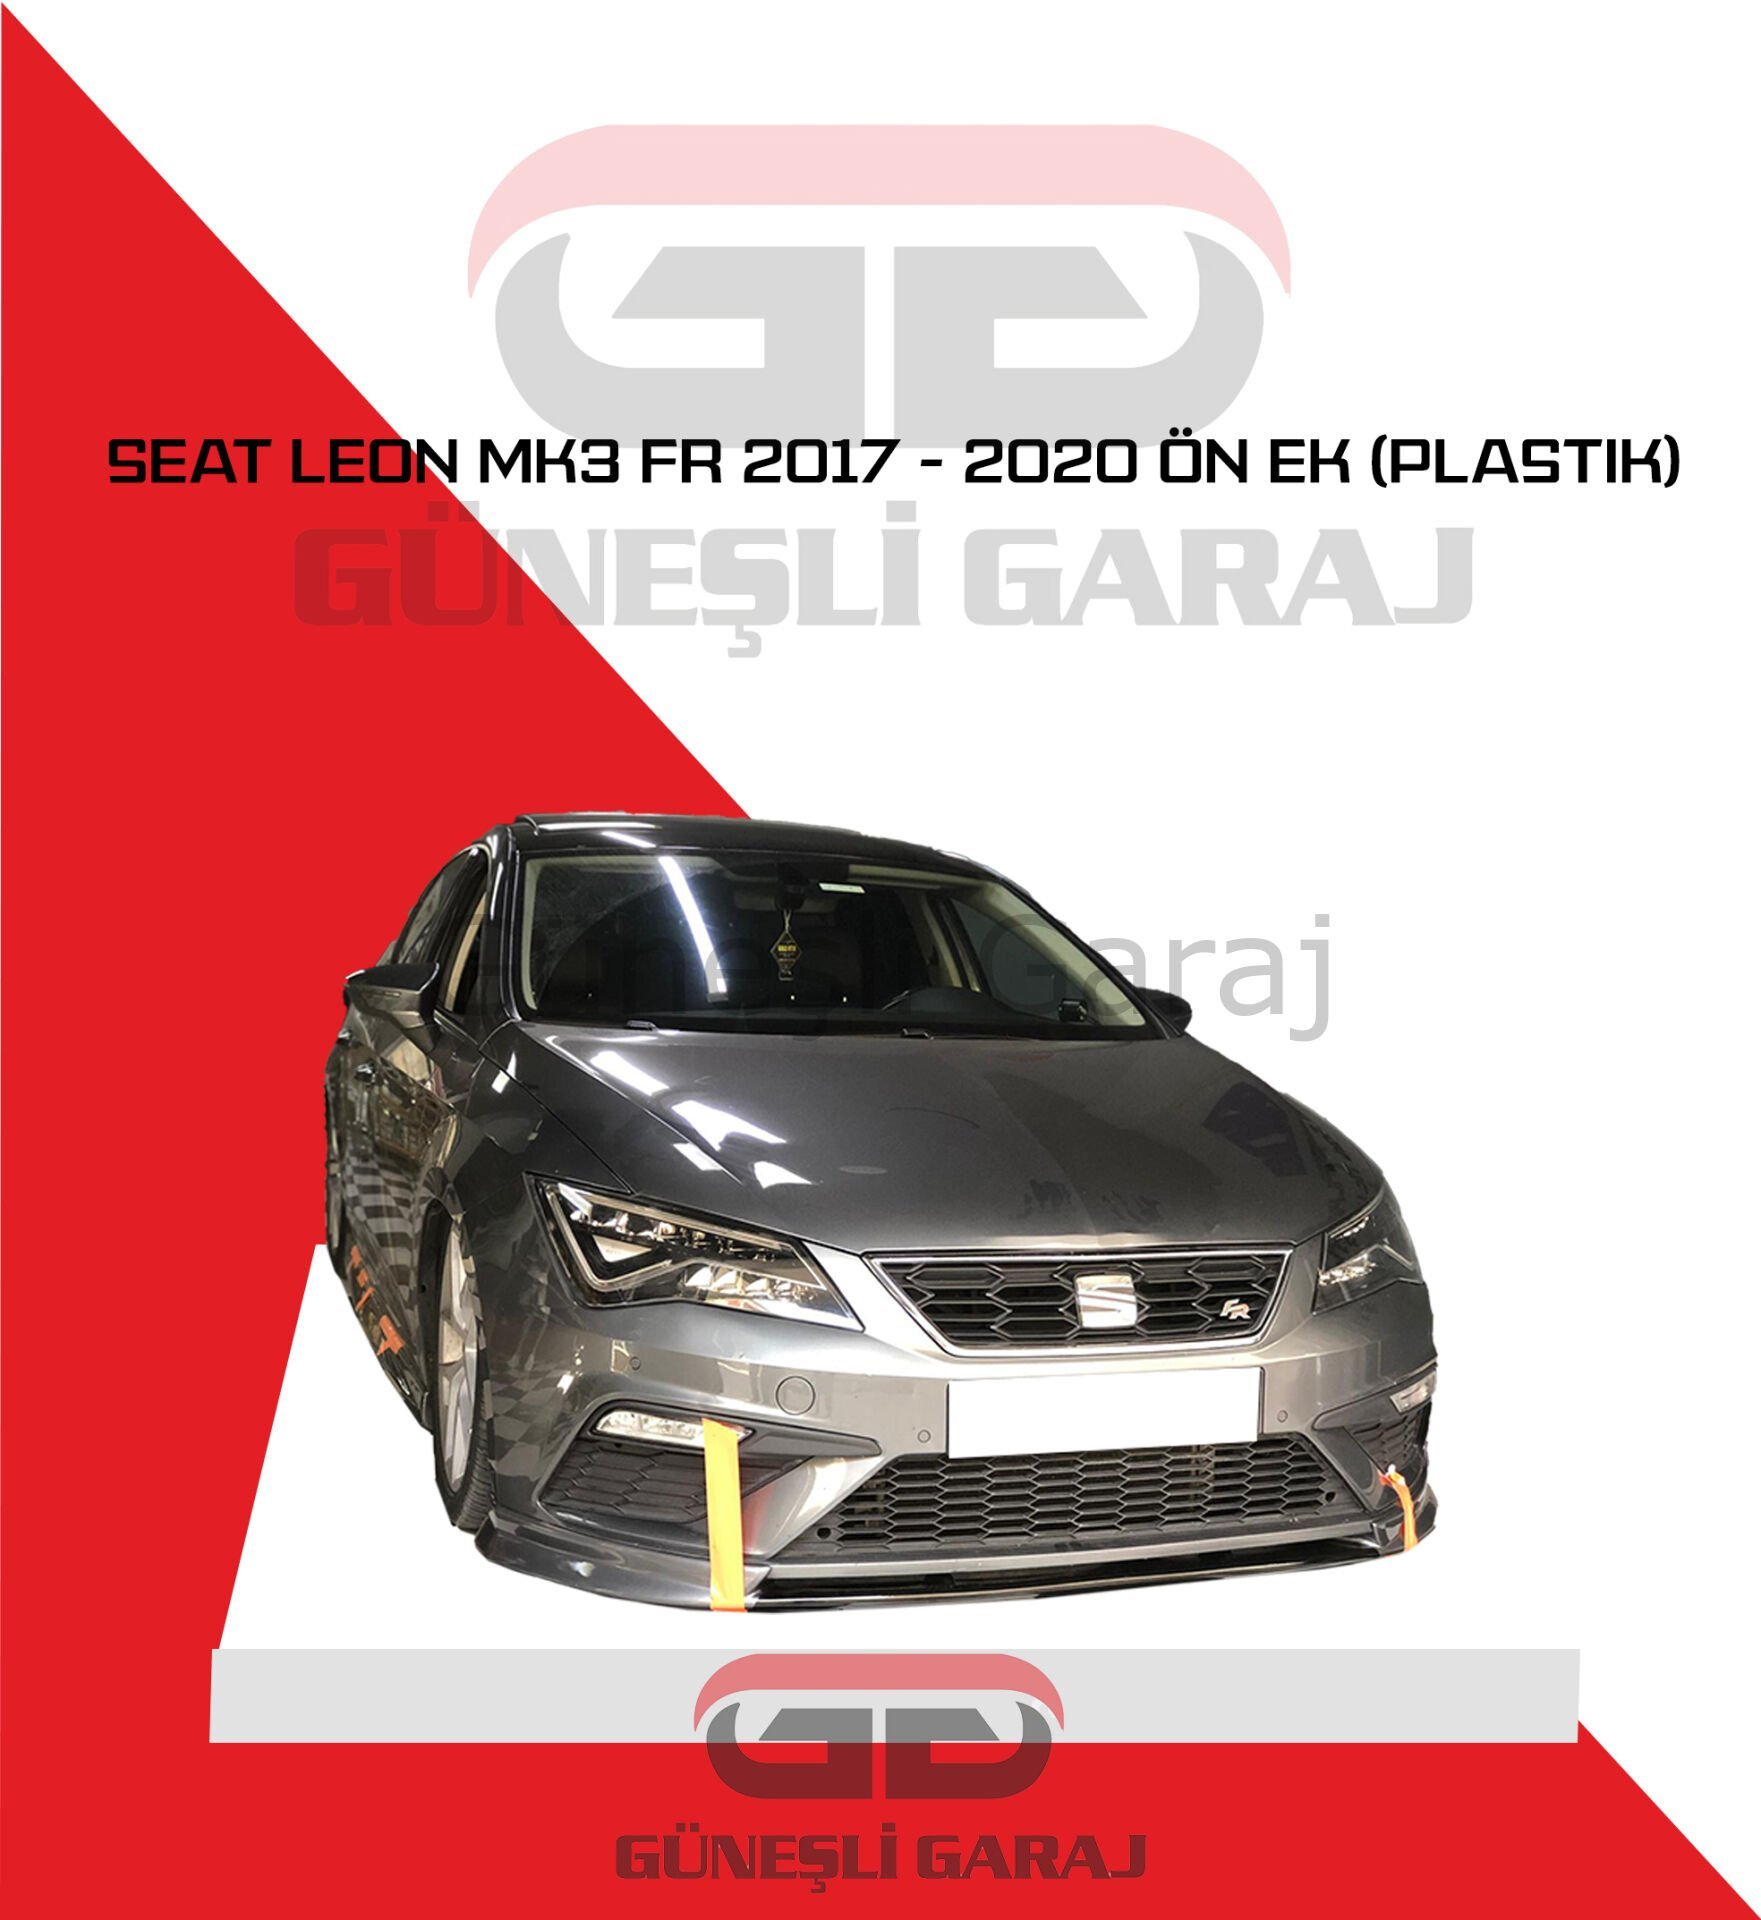 Seat Leon Mk3 Fr 2017 - 2020 Ön Ek (Plastik)